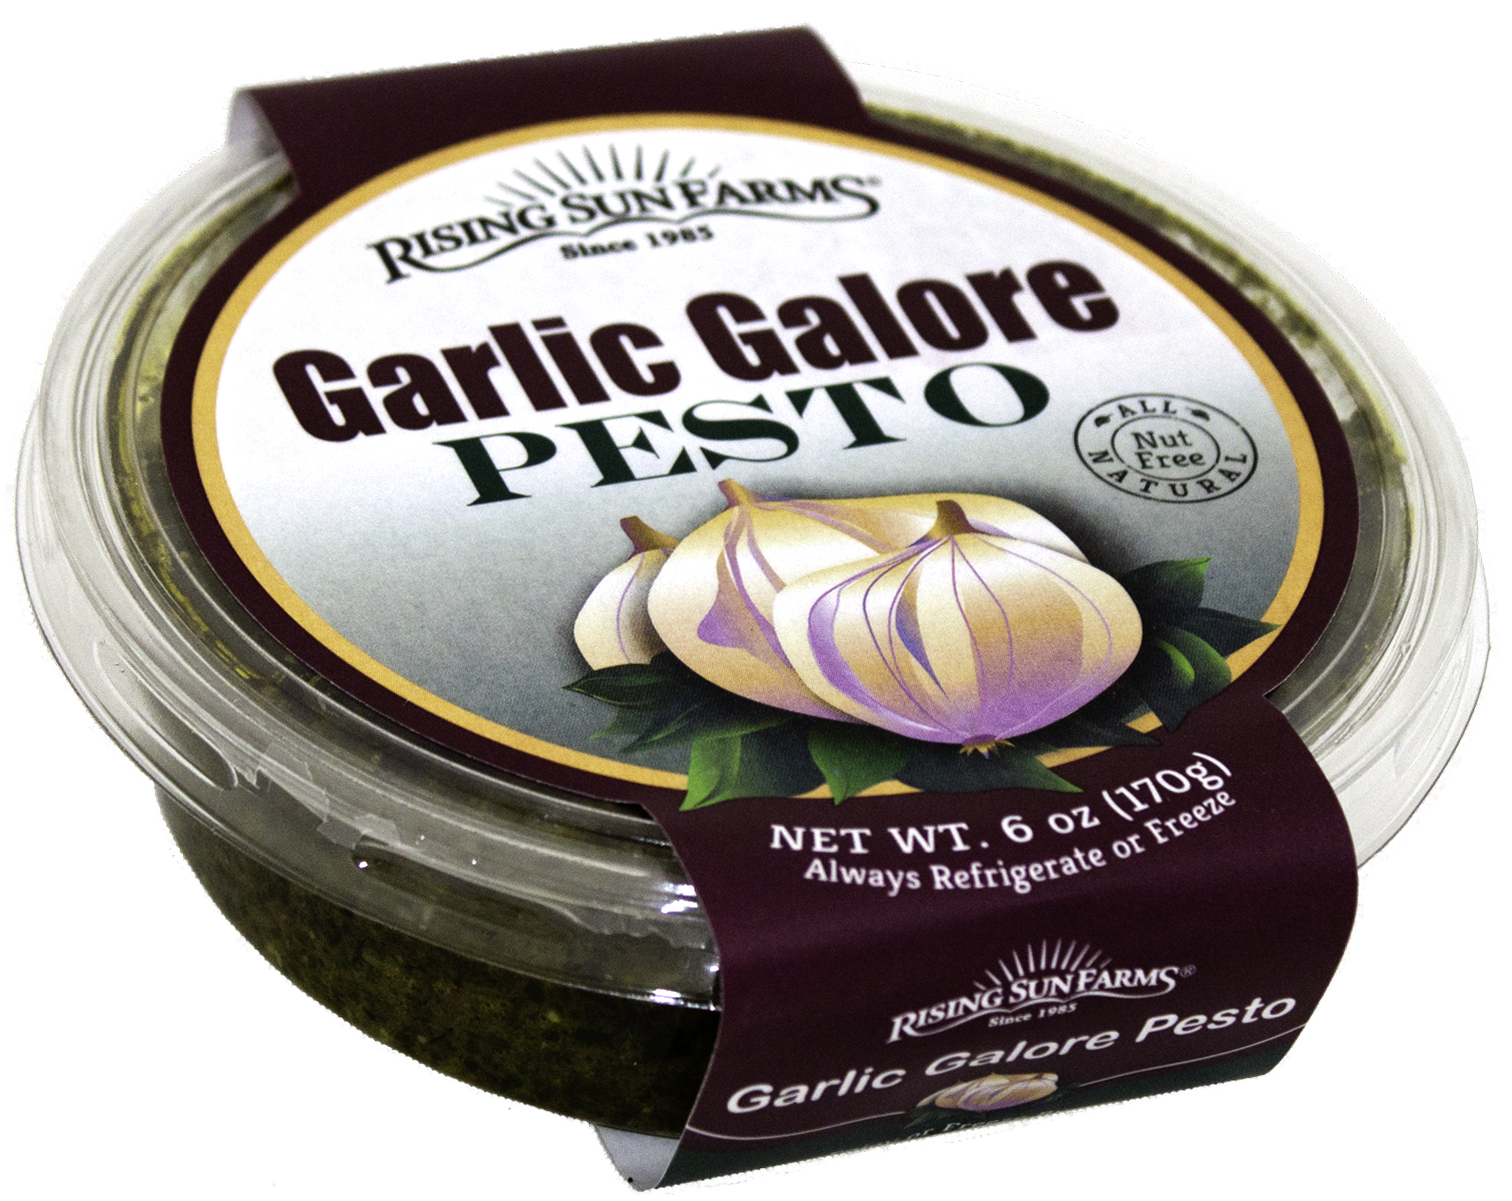 Garlic Galore Pesto 6 oz